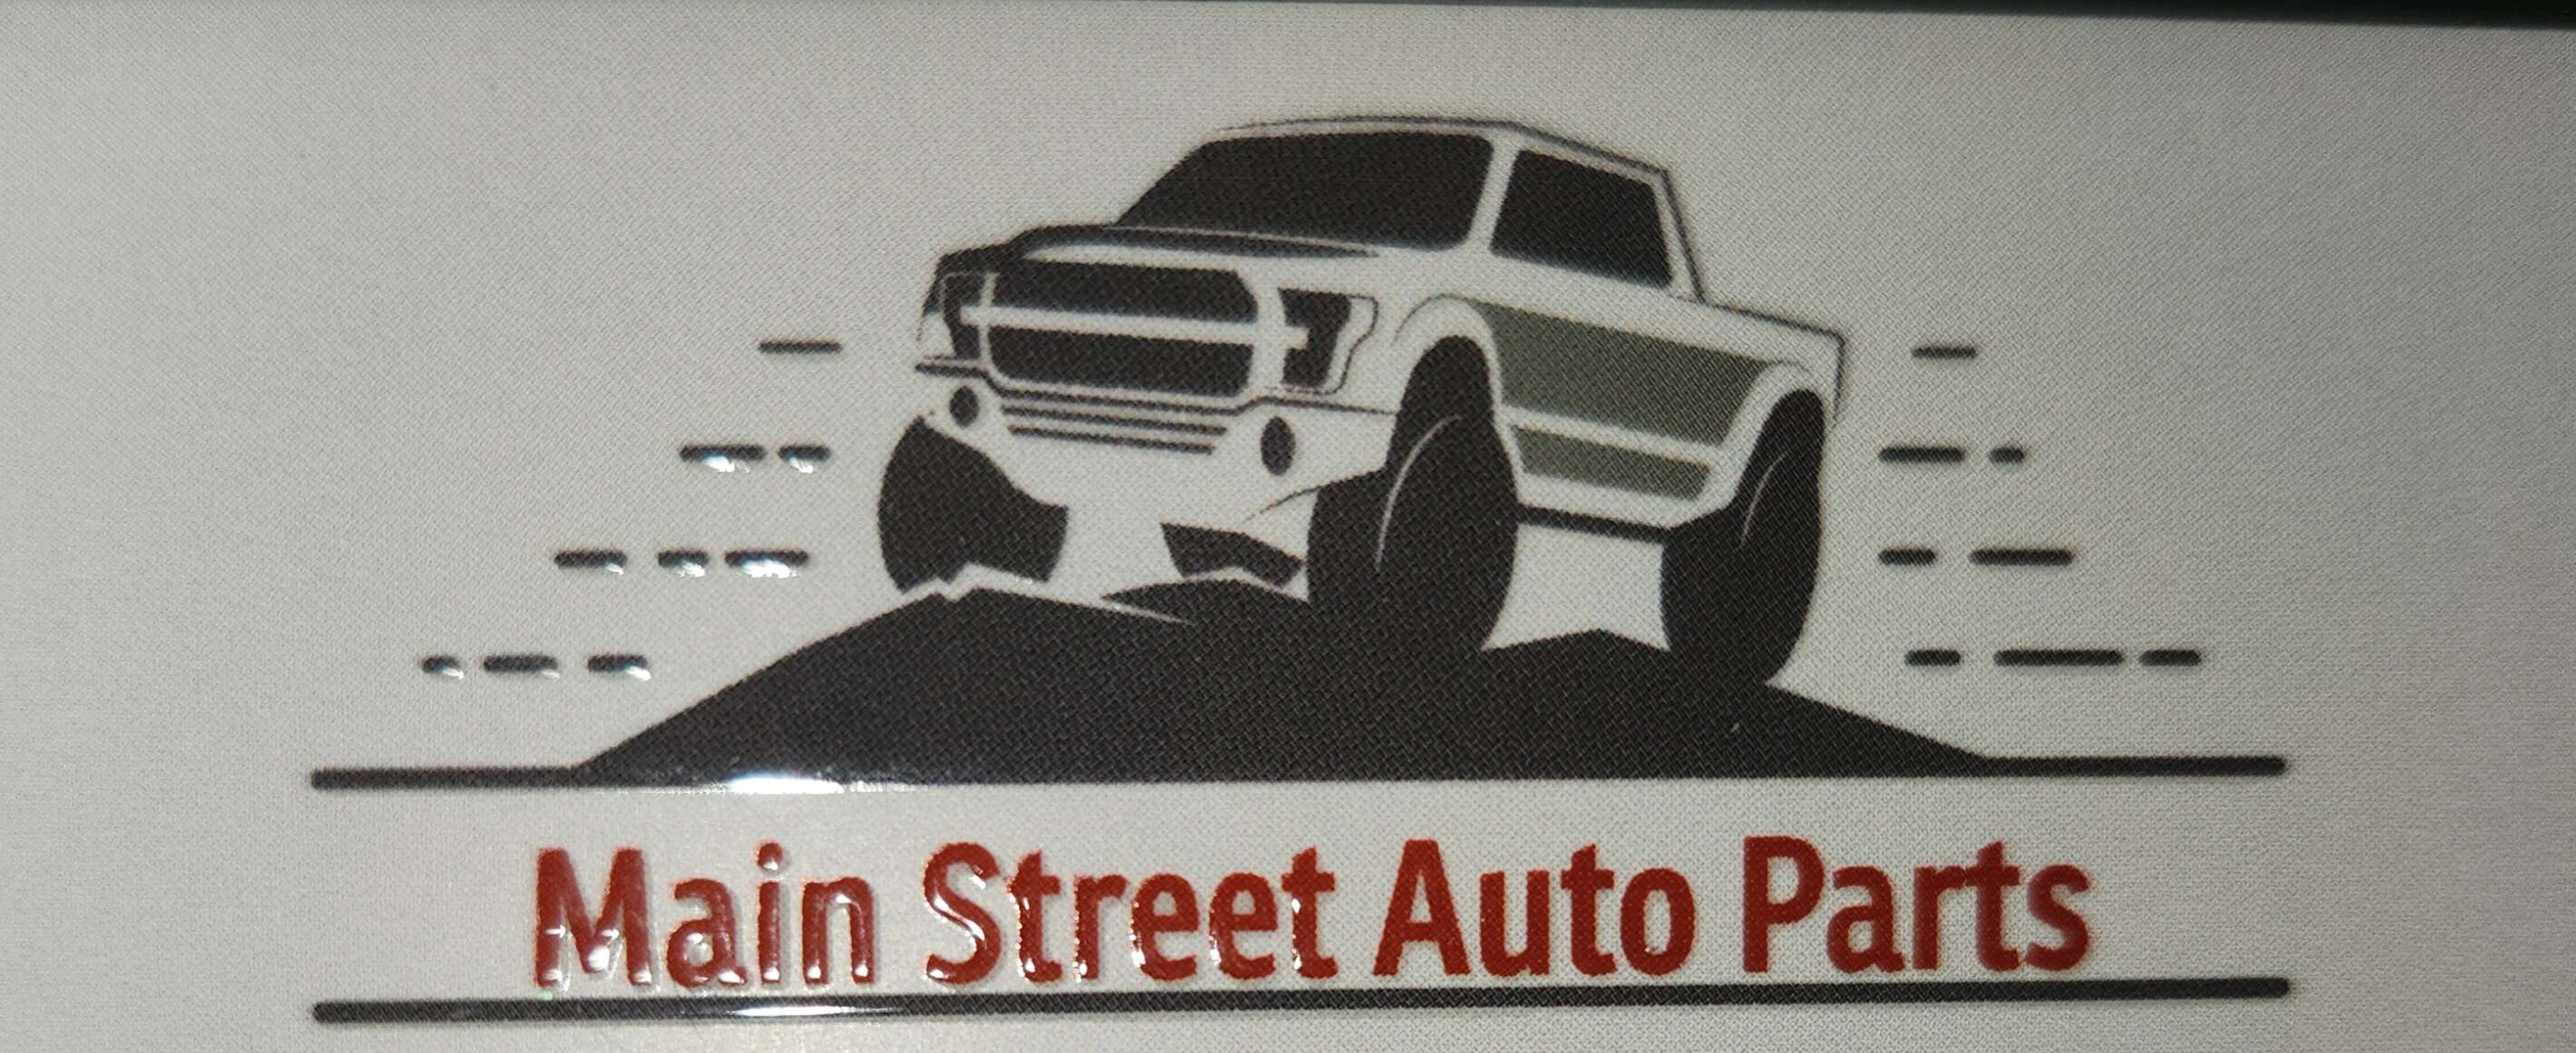 Main Street Auto Parts